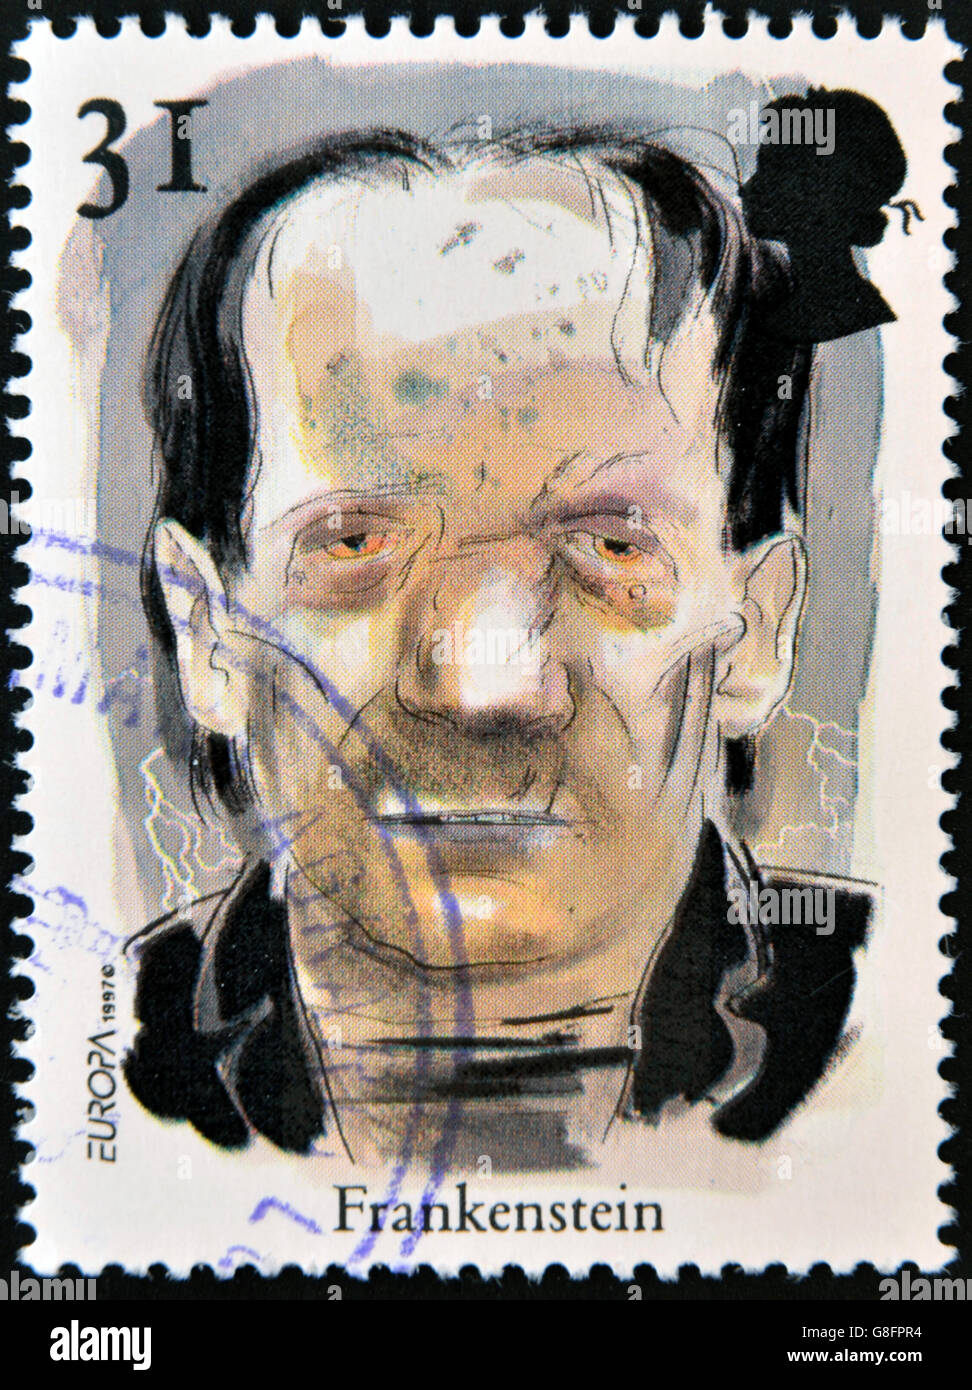 GREAT BRITIAN - CIRCA 1997: A stamp printed in United Kingdom shows a portrait of Frankestein, circa 1997 Stock Photo